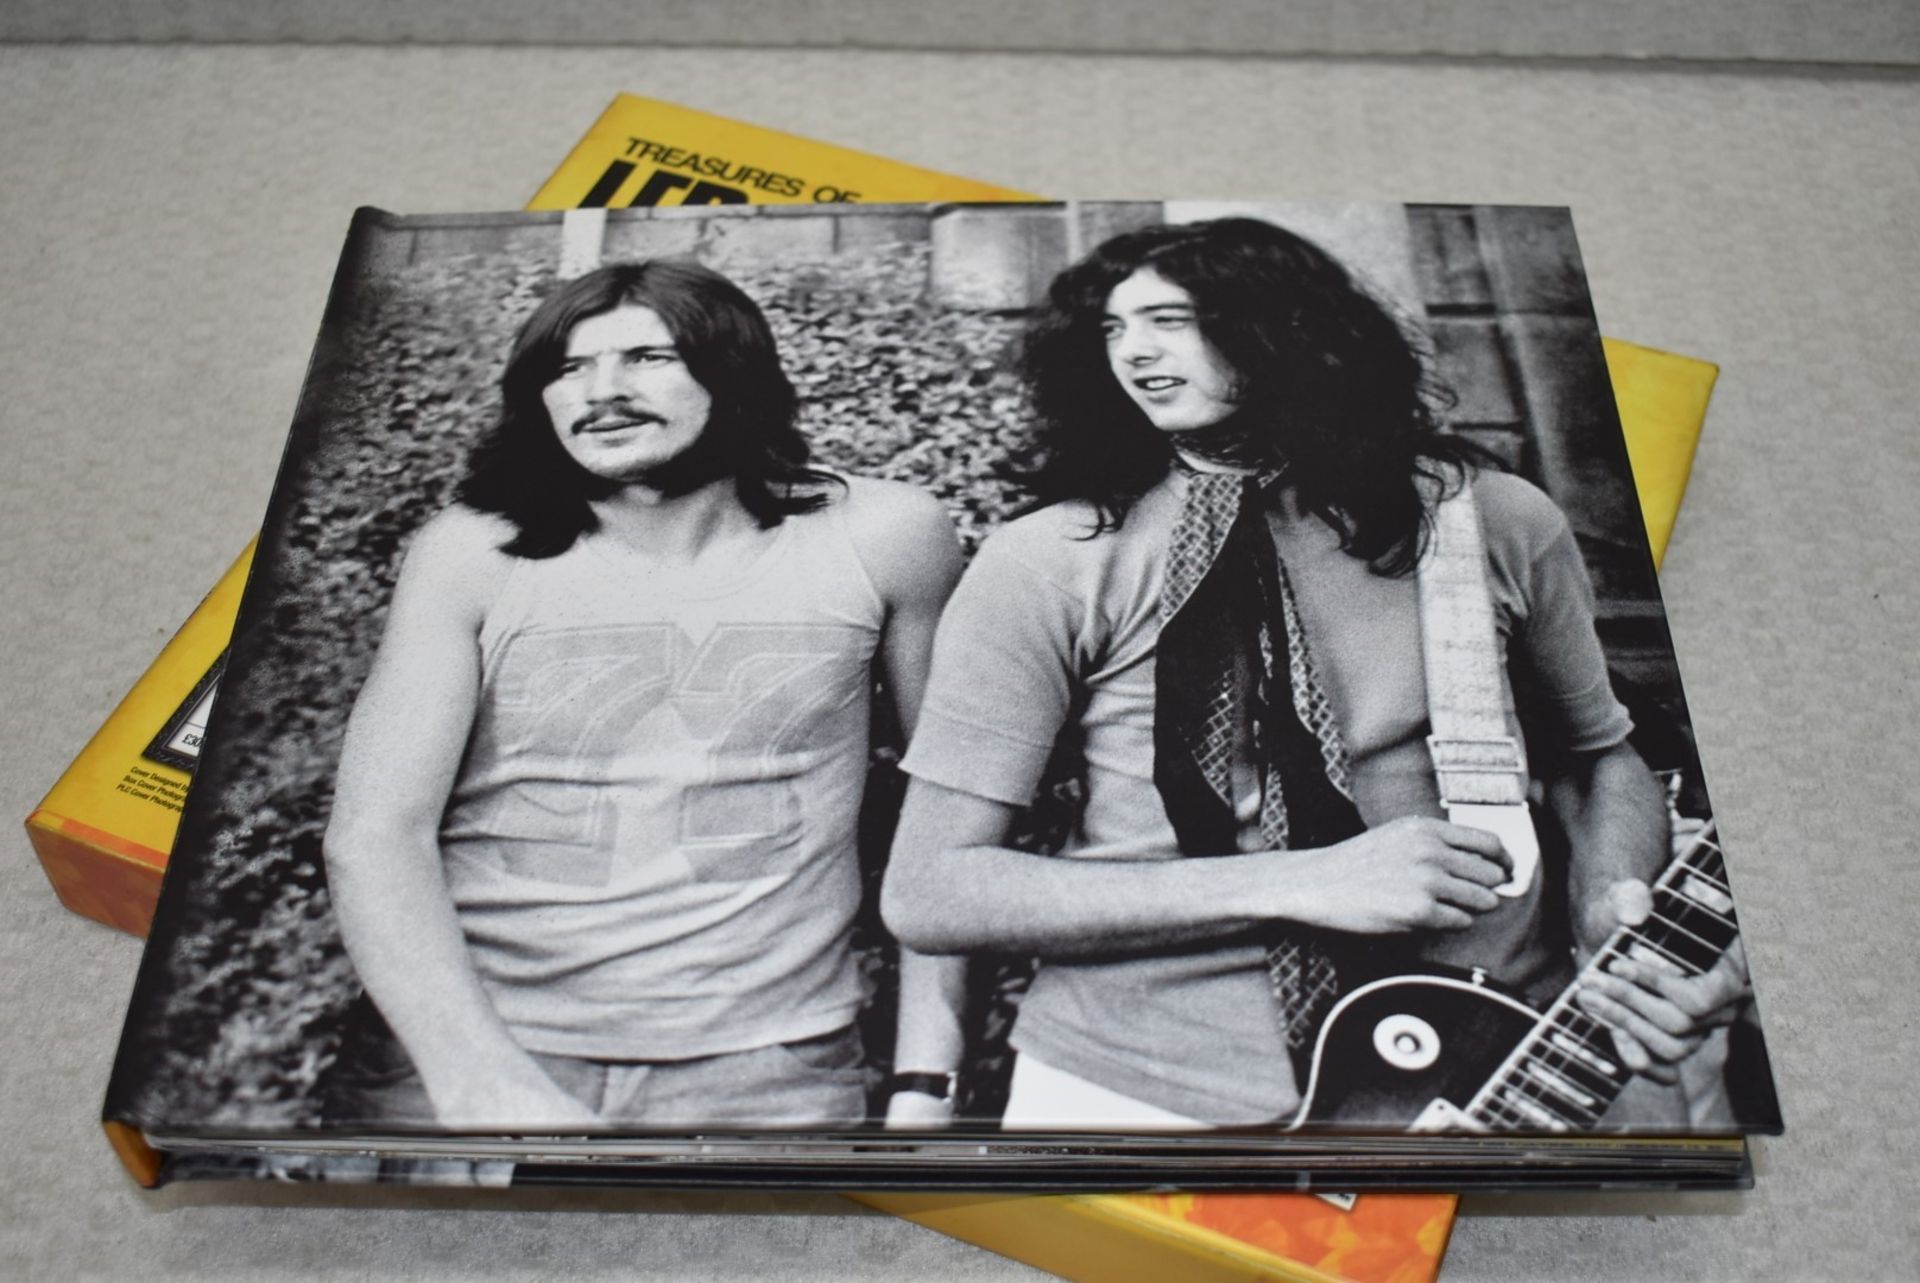 1 x Treasures of Led Zeppelin Box Set - Includes Illustrated Book and Facsimiles of Rare Memorabilia - Image 3 of 9